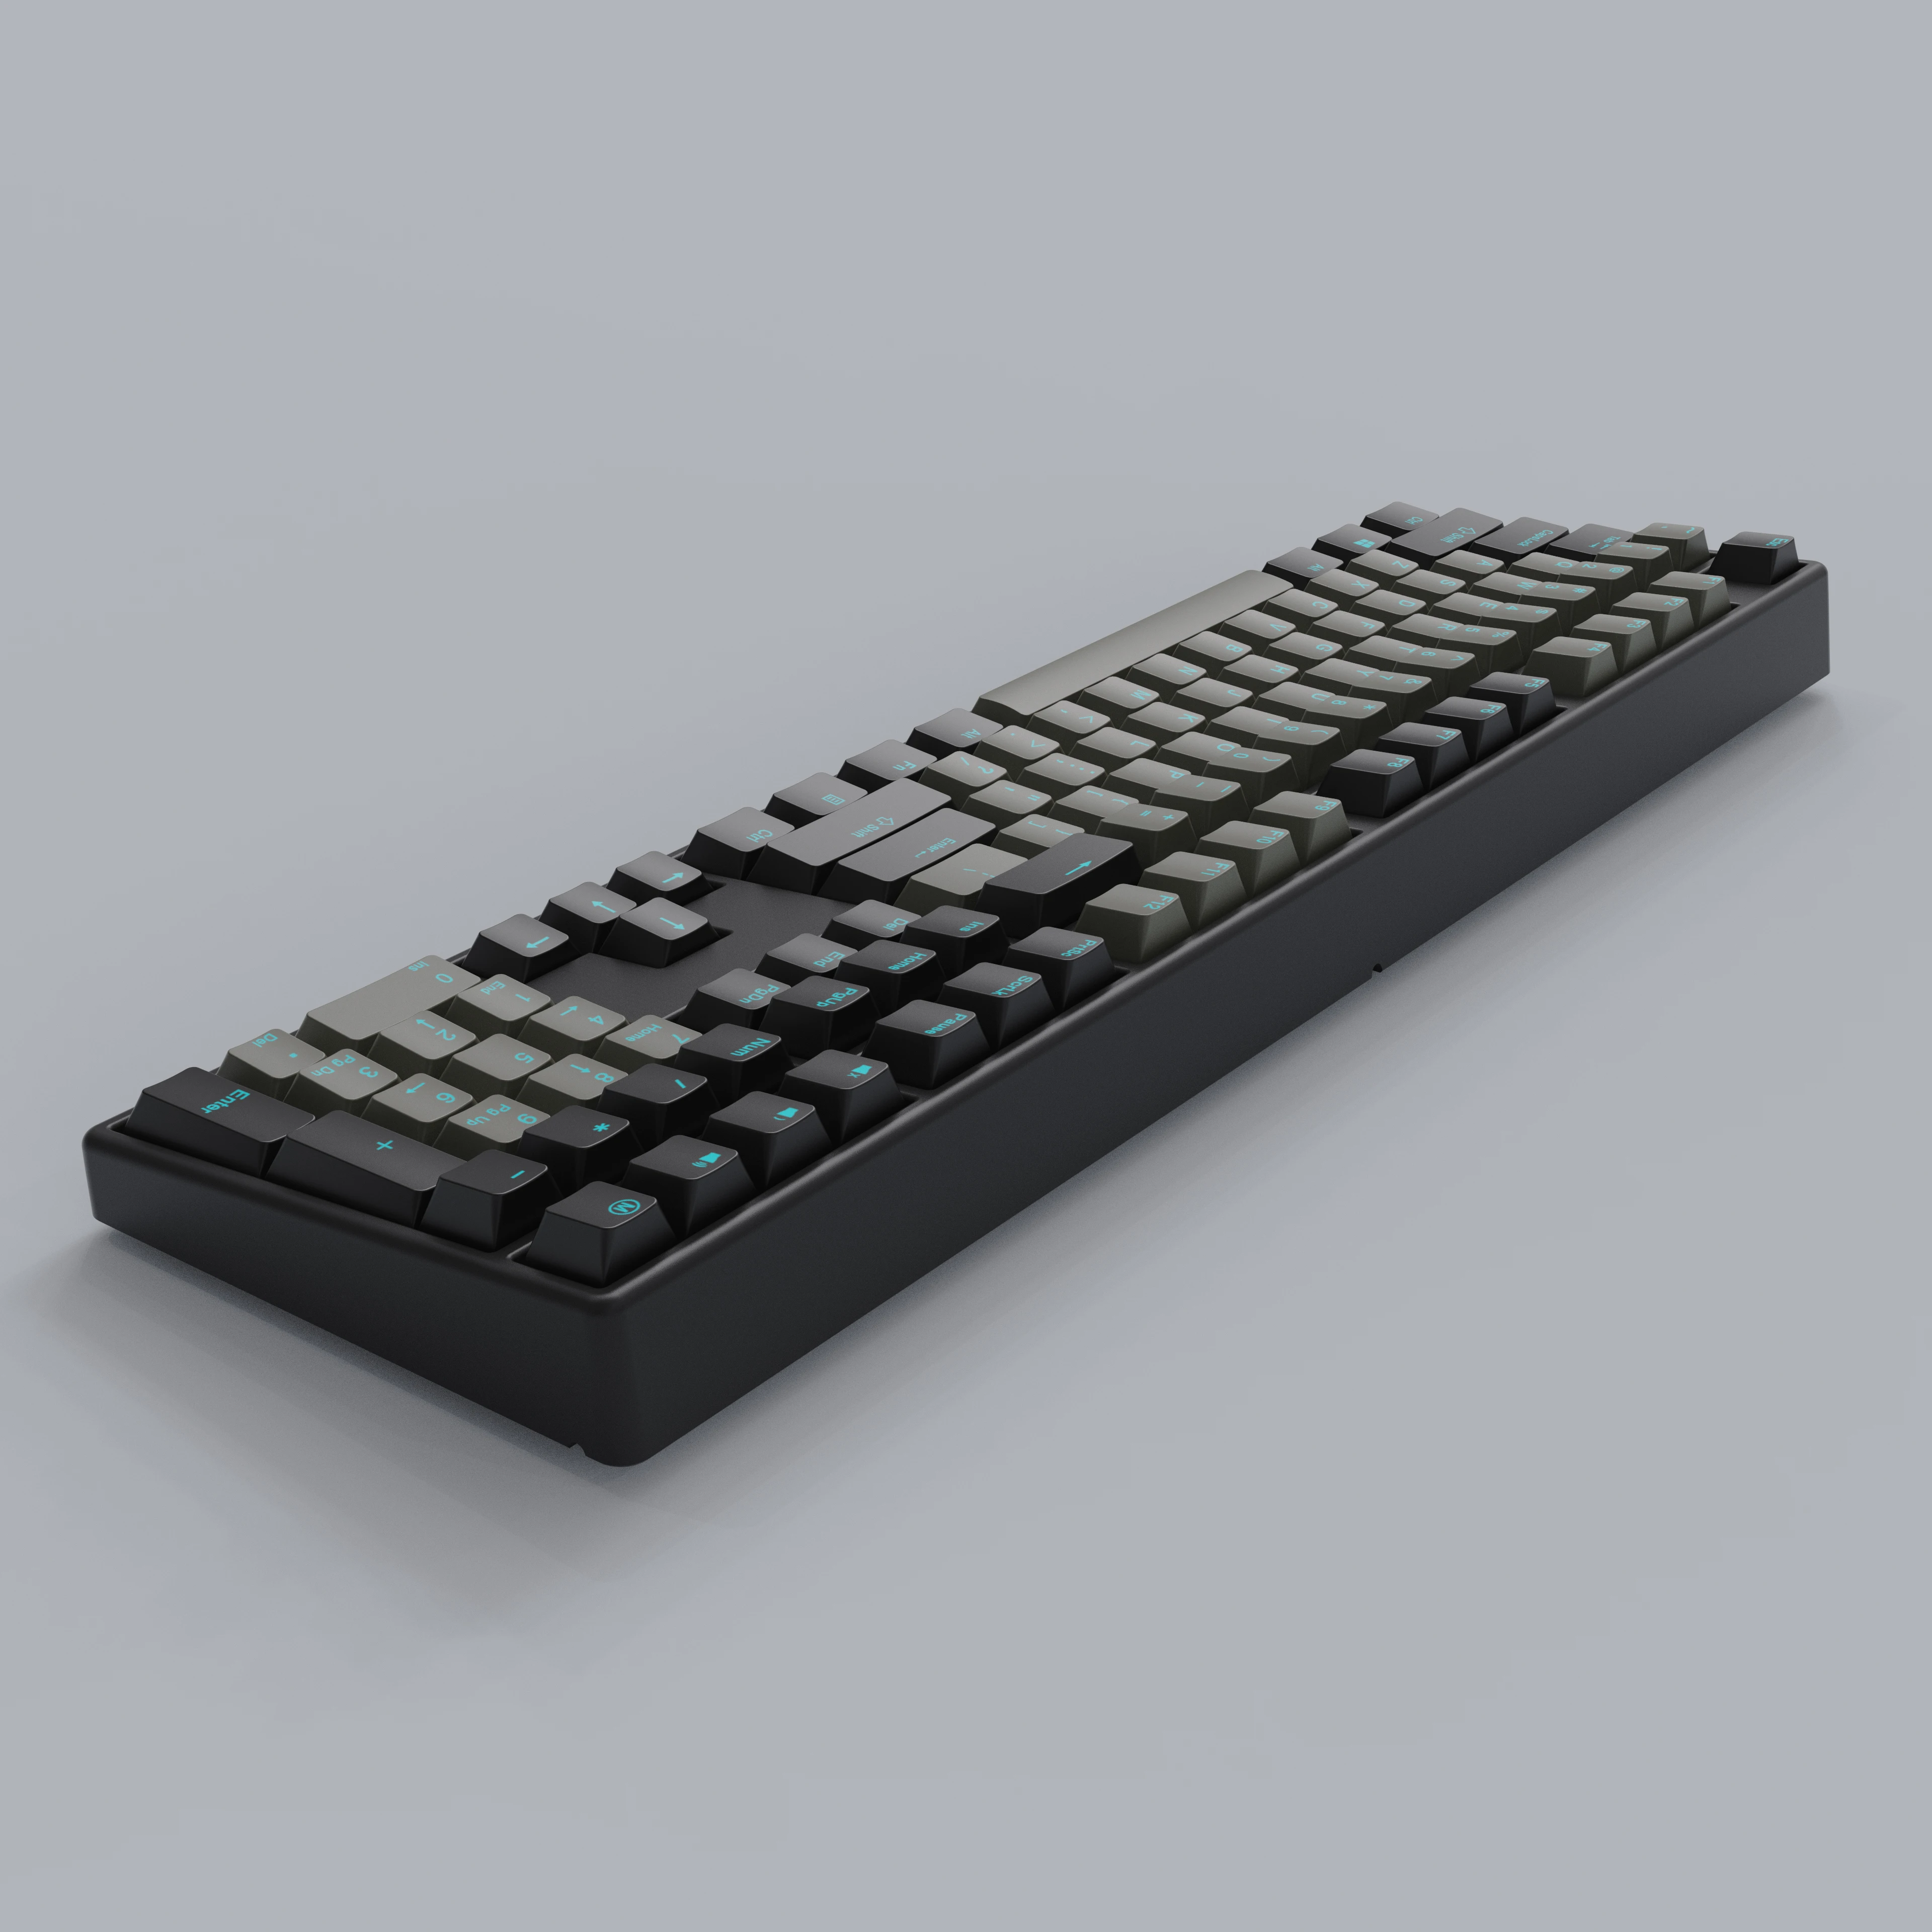 X108 Capacitancia Black 2021 NIZ EC Keyboard USB Bluetooth RGB Mode Multi-Function Programmer Keyboard PBT Keycaps New Swithes